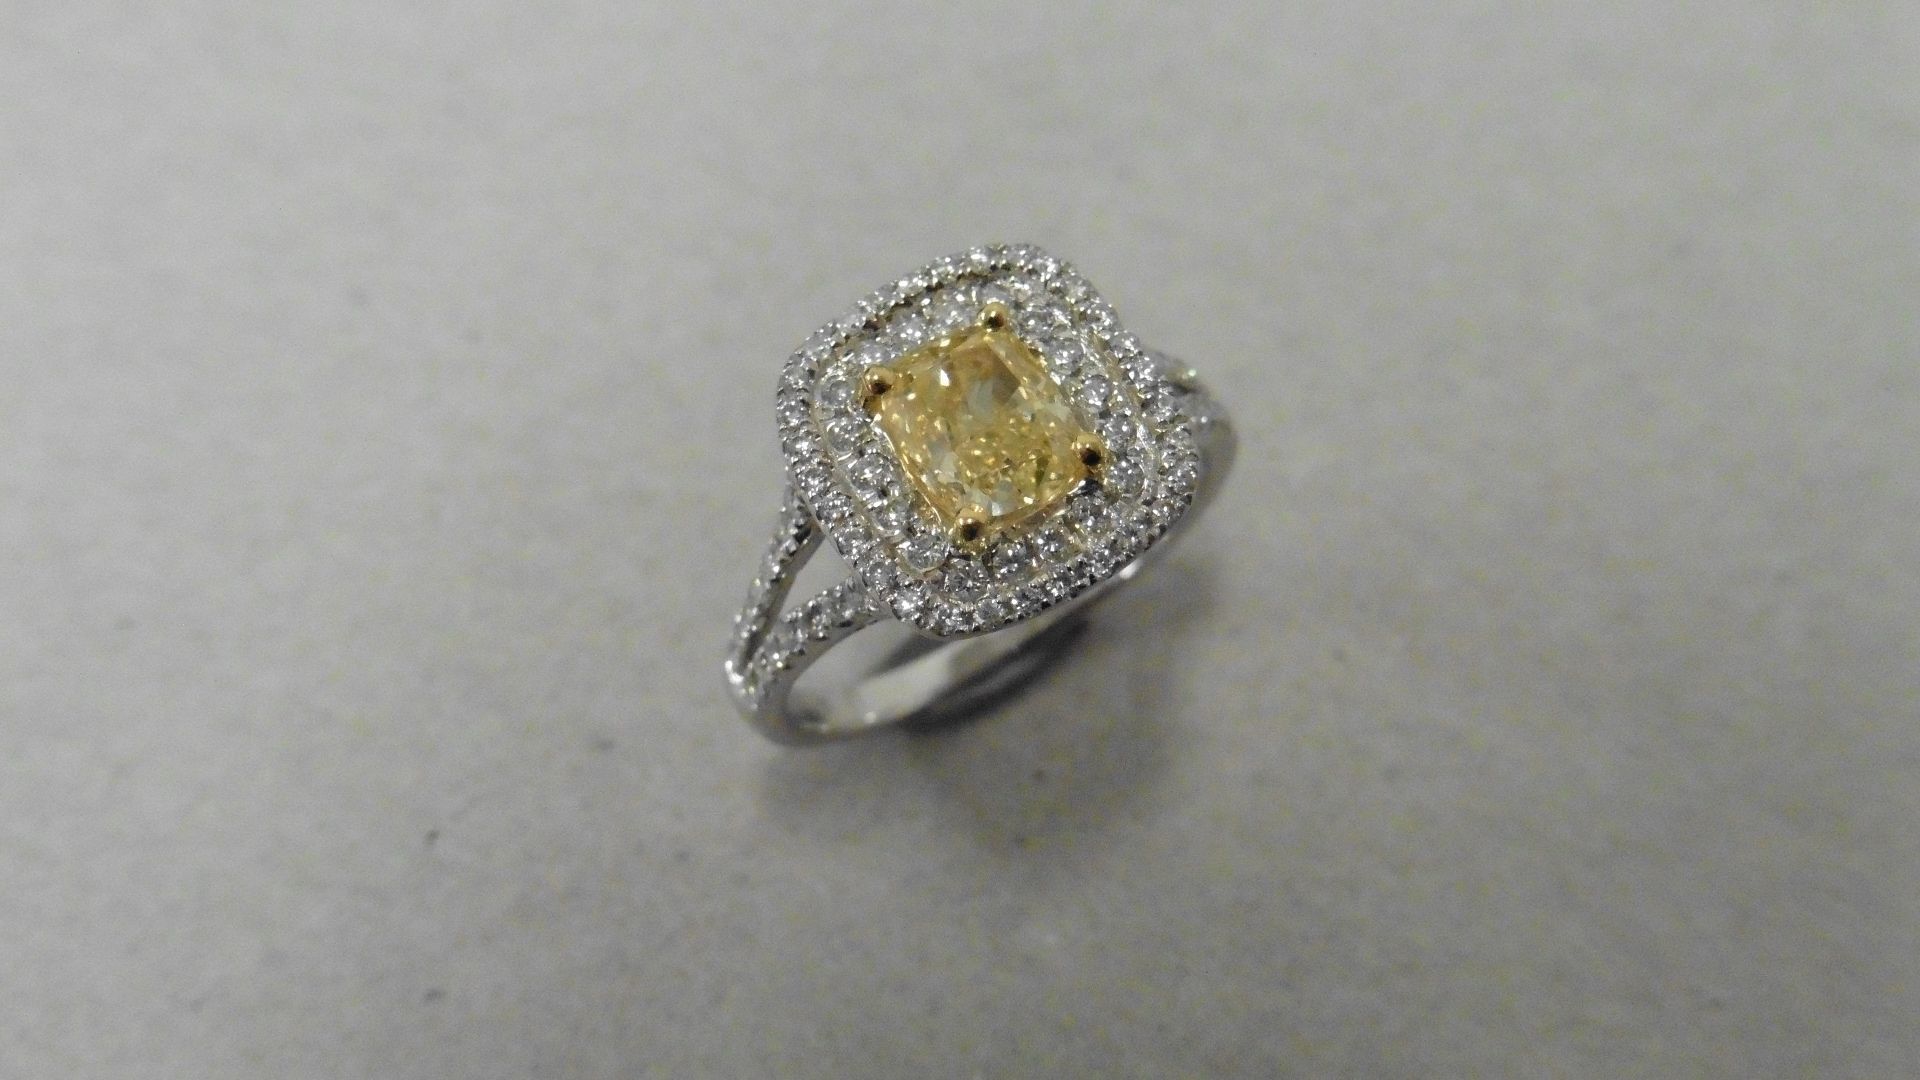 1.13ct diamond set solitaire ring. Yellow cushion cut diamond,Fancy yellow/green, Si1 clarity on GIA